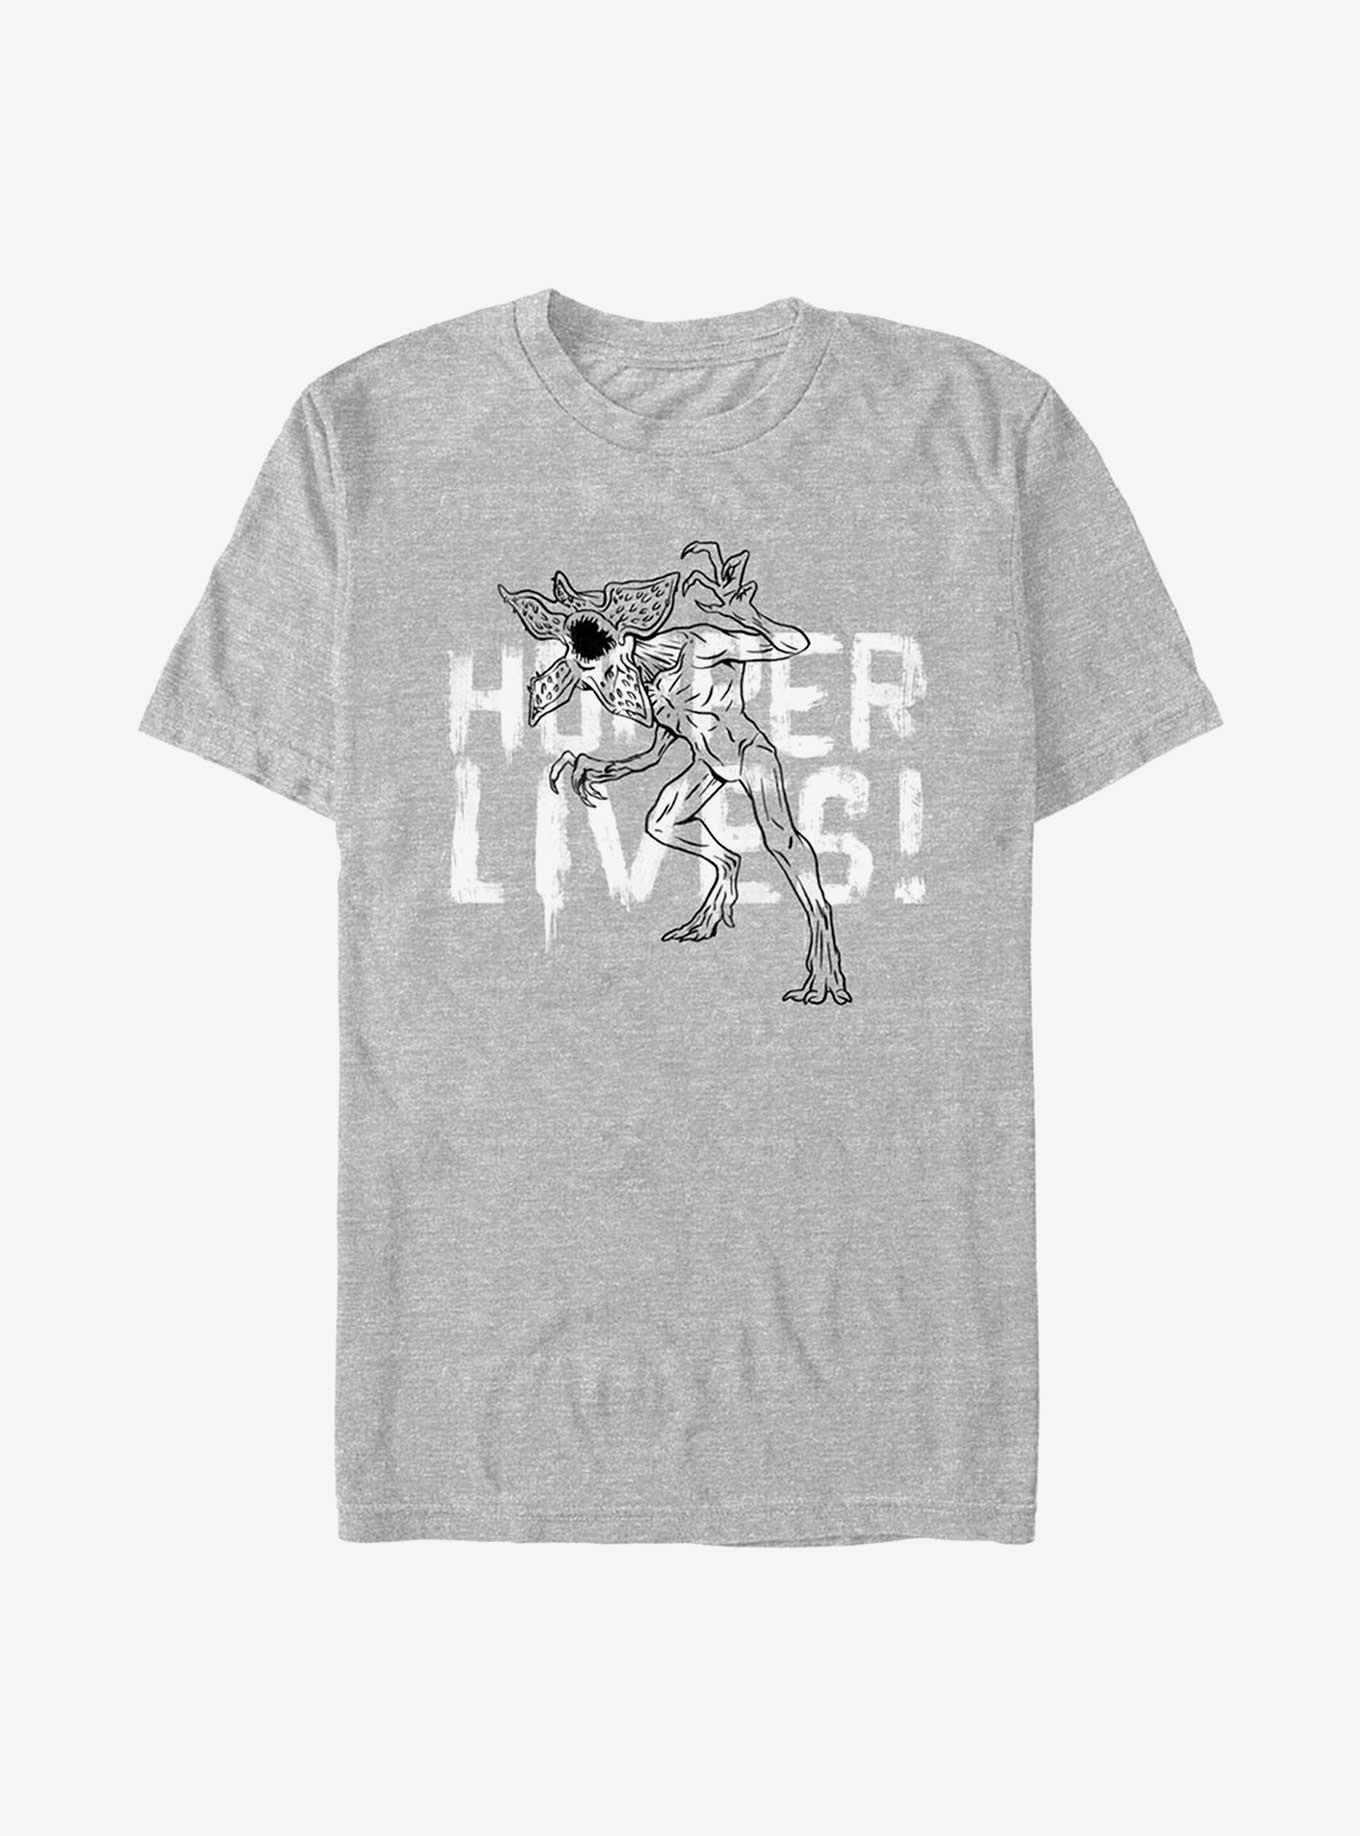 Stranger Things Hopper Lives T-Shirt, ATH HTR, hi-res